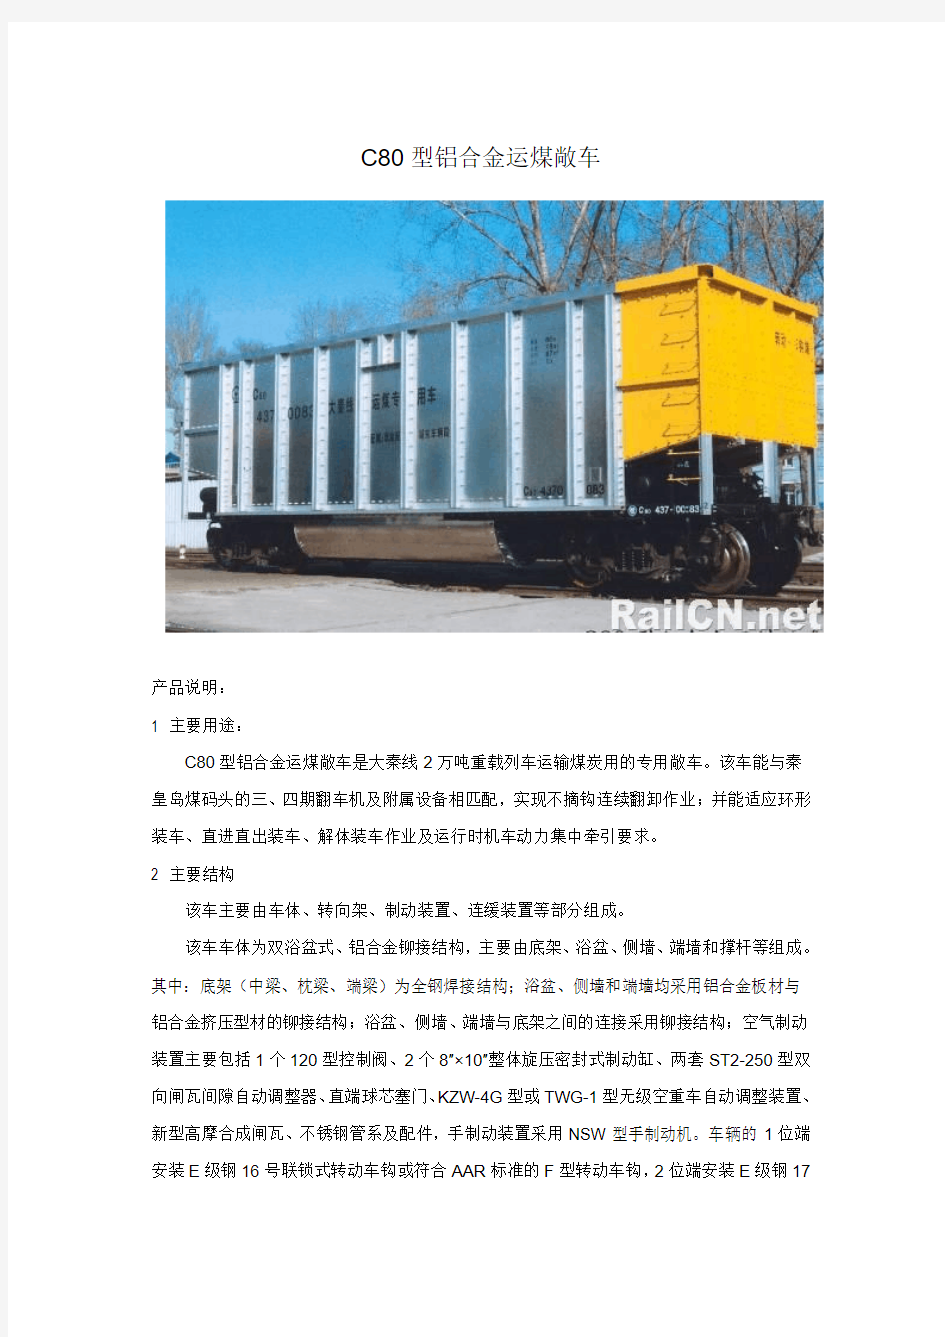 C80型铝合金运煤敞车-大秦线2万吨重载列车运输煤炭用的专用敞车参数